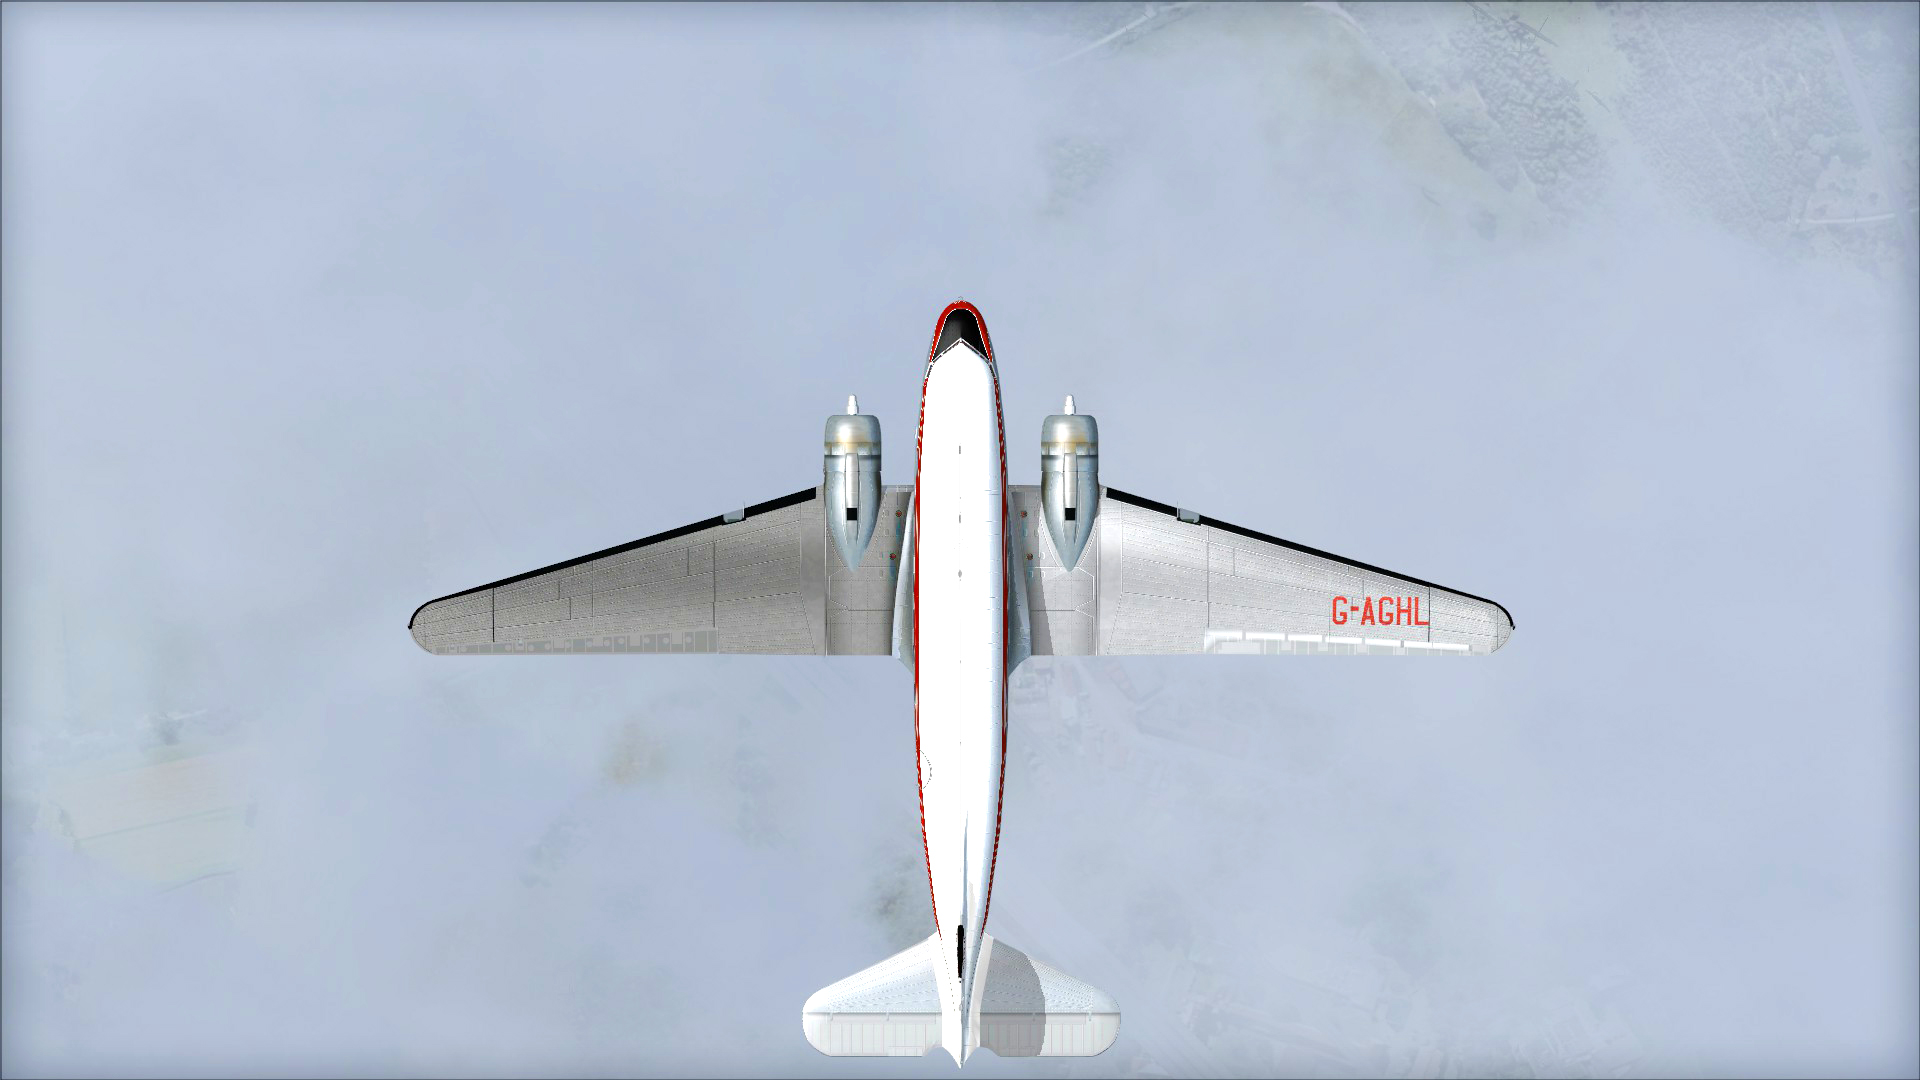 FSX Steam Edition: McDonnell Douglas DC-10™ on Steam